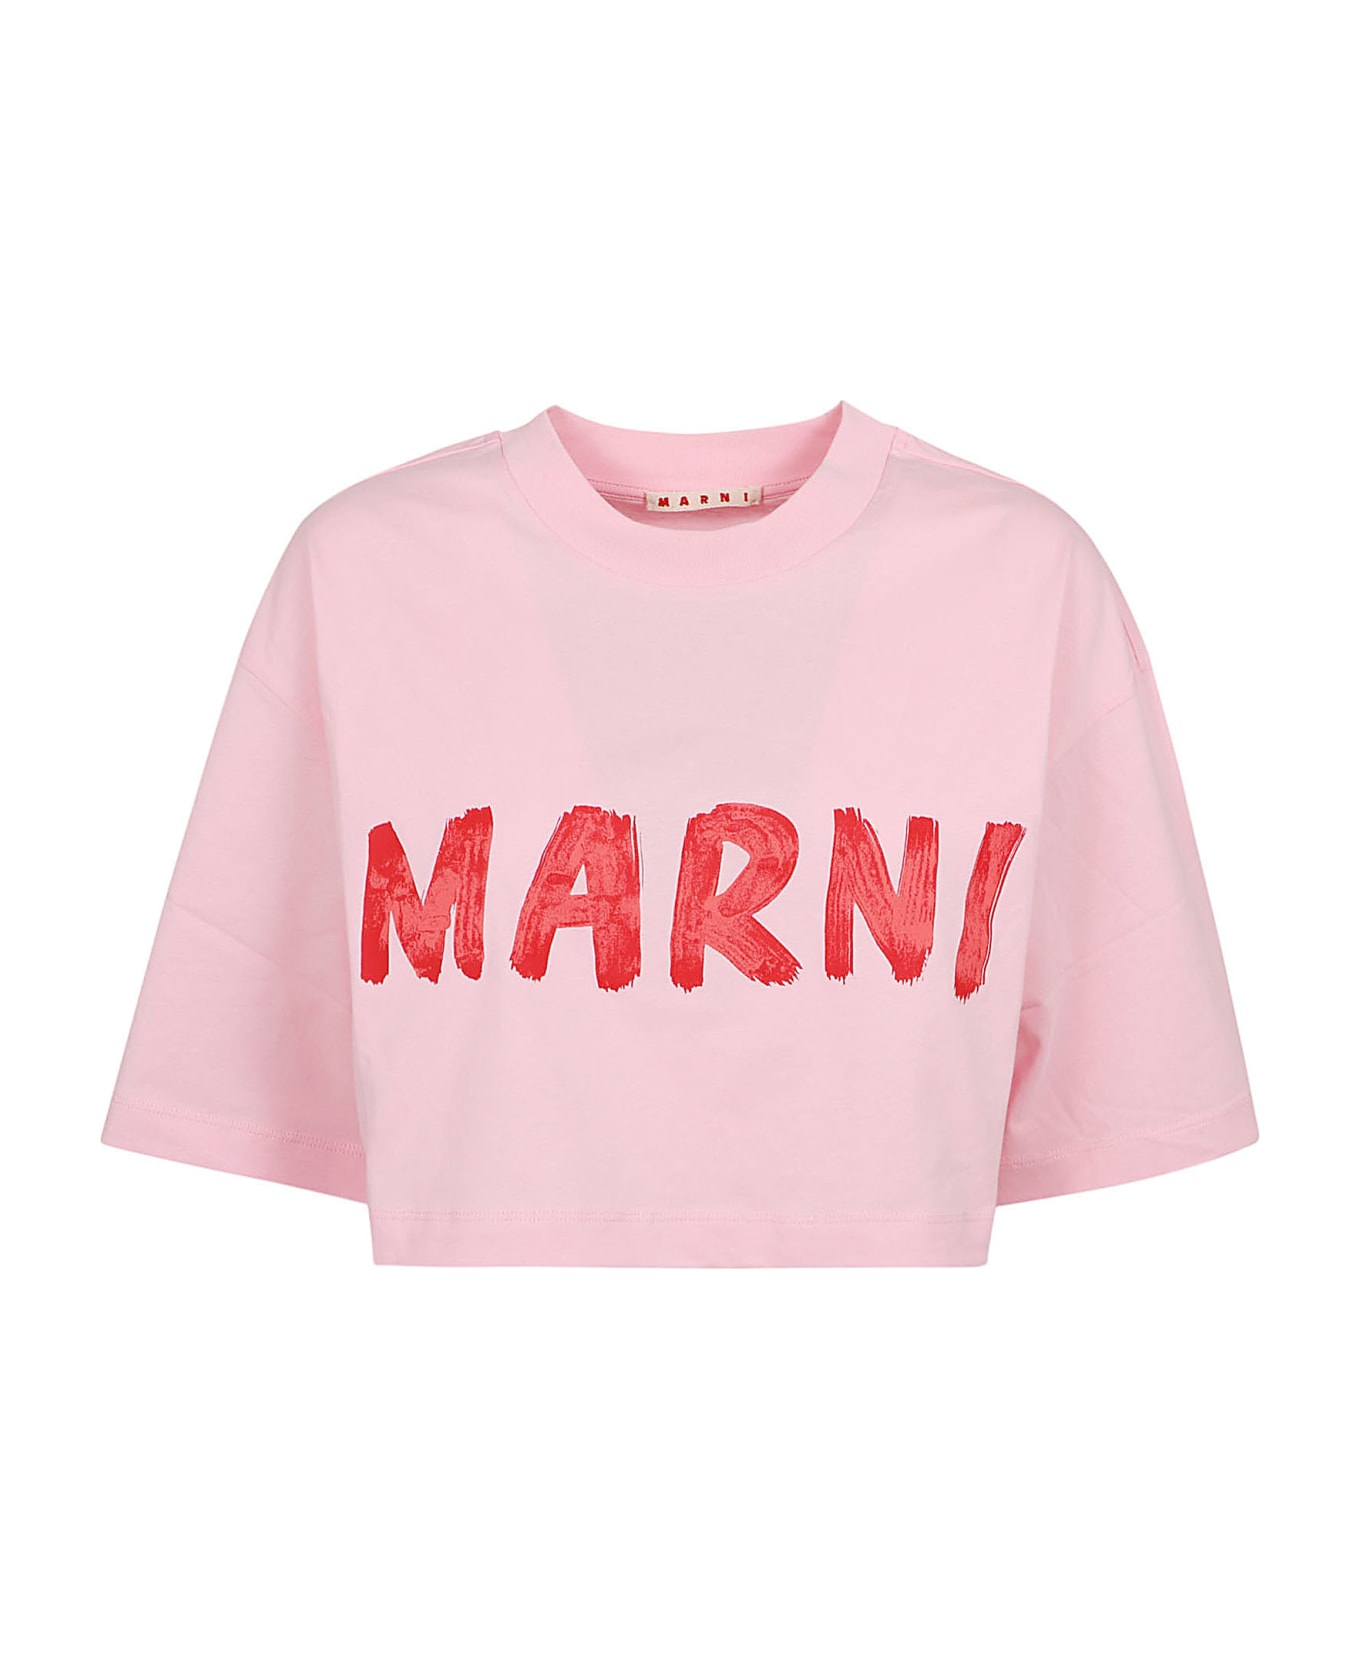 Marni T-shirt - Cinder Rose